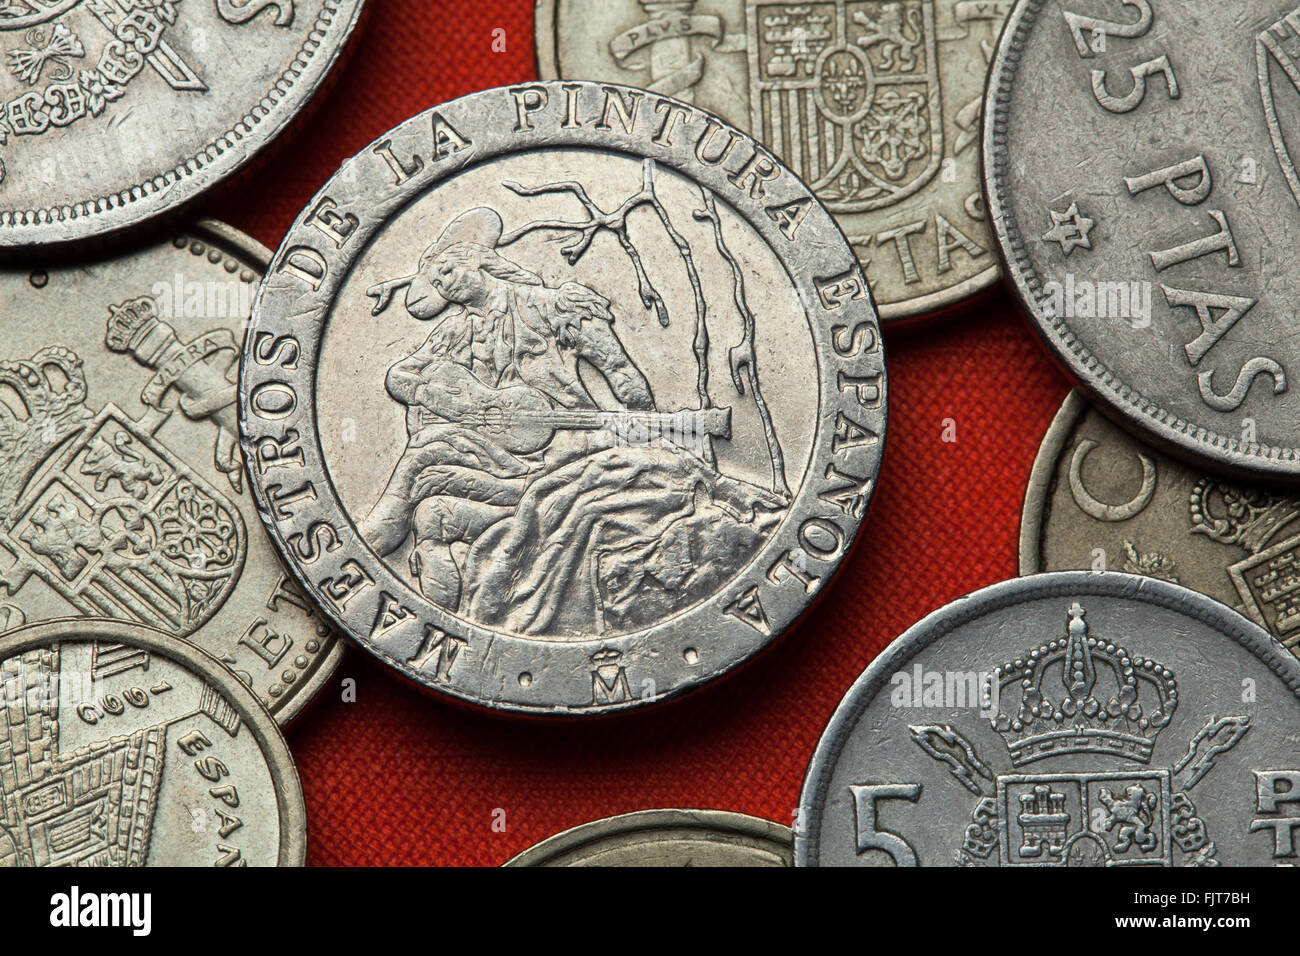 Coins of Spain. Spanish commemorative 200 peseta coin (1996) dedicated to Spanish Neoclassicist painter Ramon Bayeu. Stock Photo